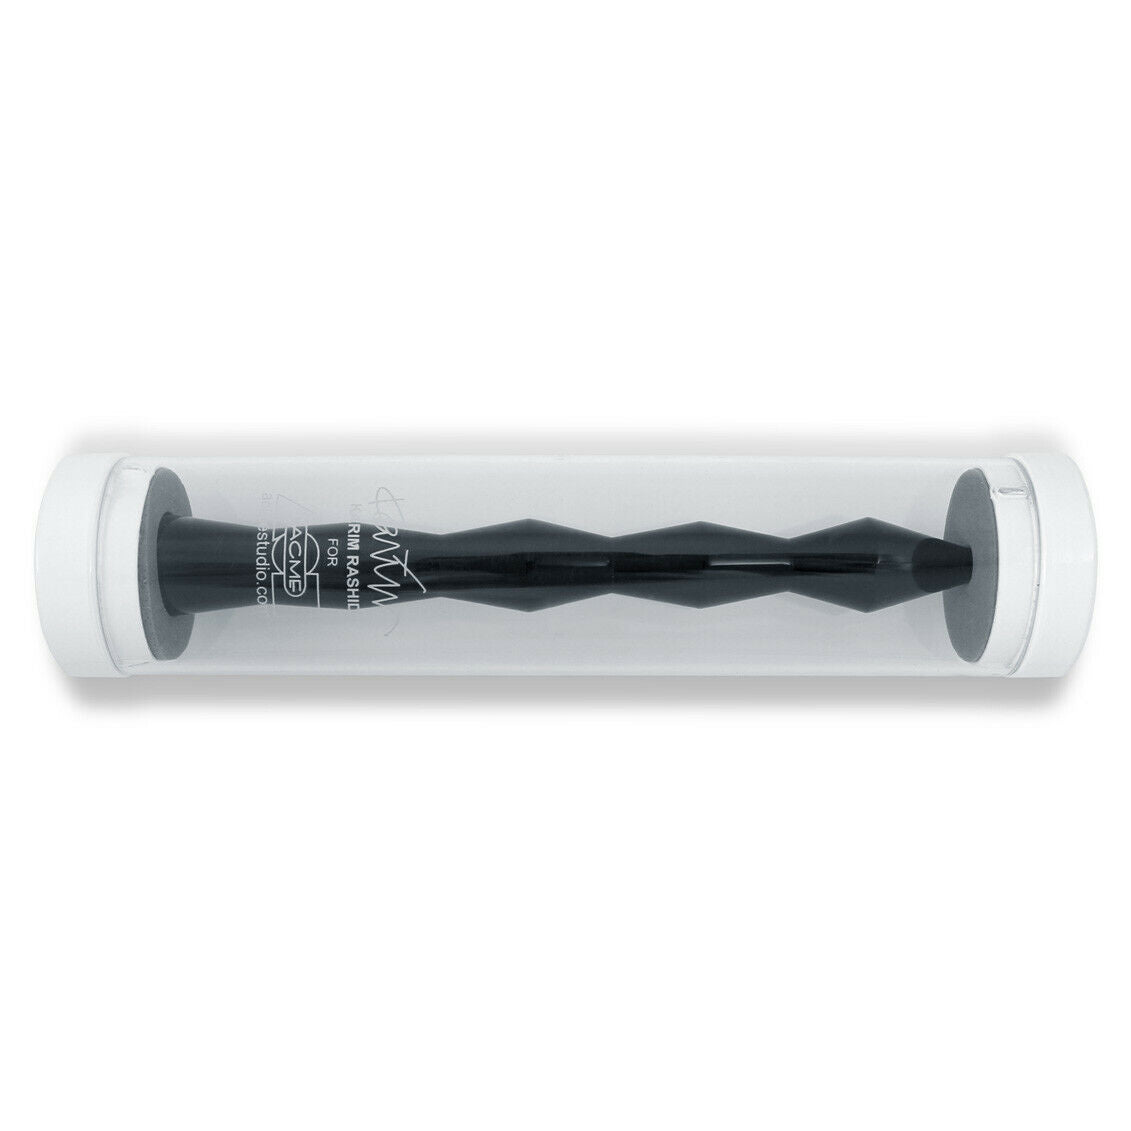 ACME Kuzi - Black by Karim Rashid Retractable Ballpoint Pen